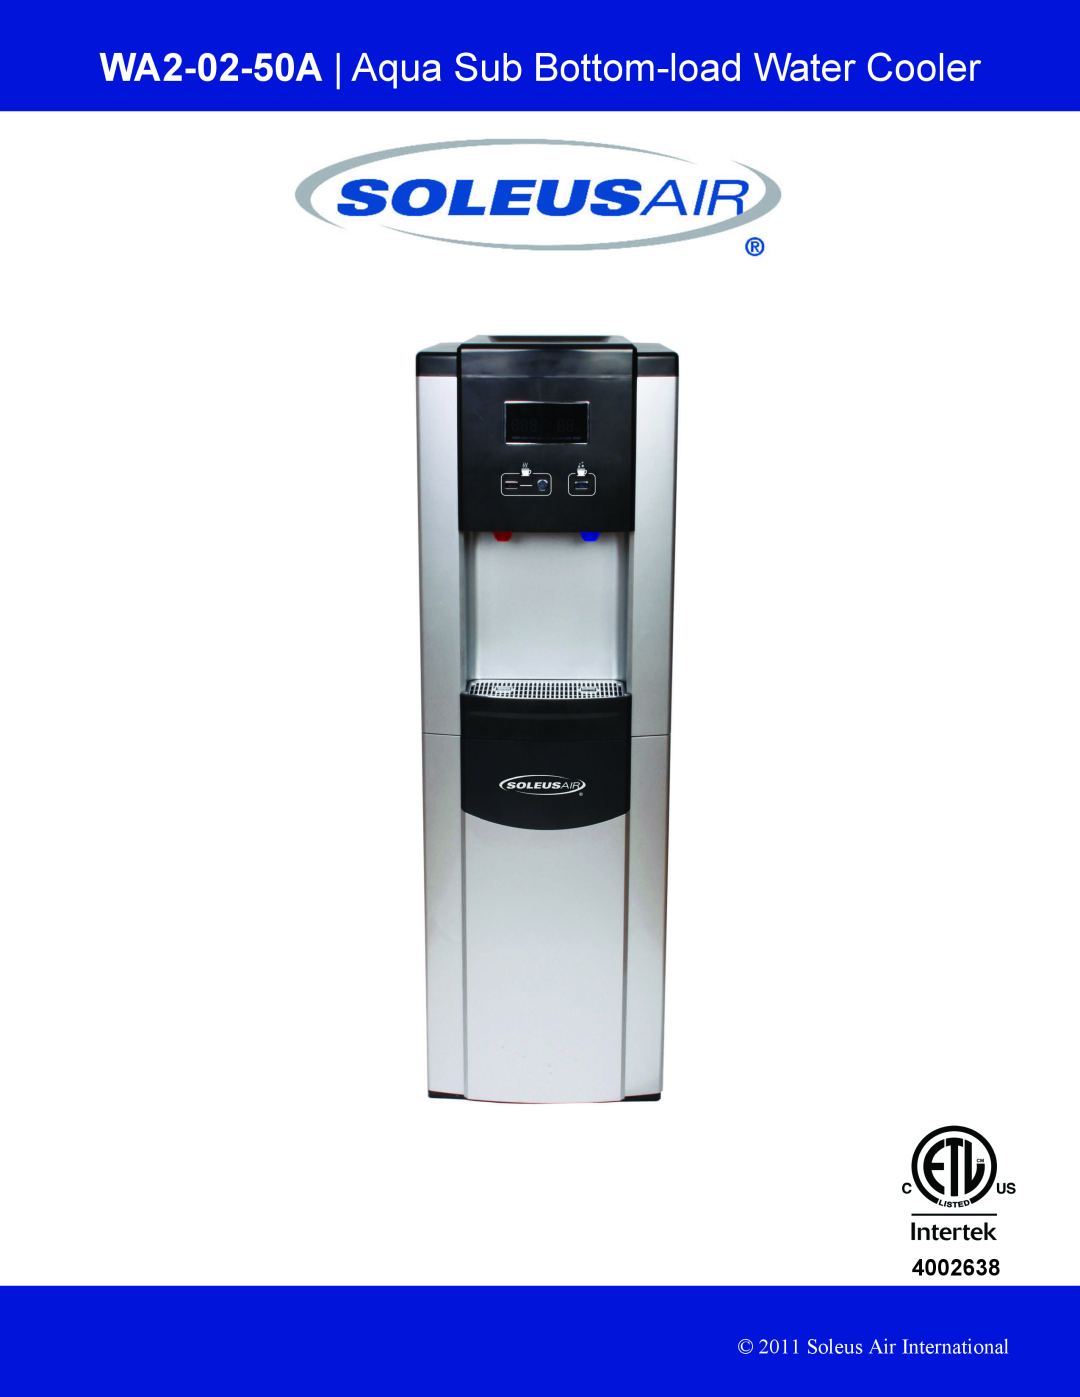 Soleus Air manual WA2-02-50A Aqua Sub Bottom-loadWater Cooler, 4002638, Soleus Air International 